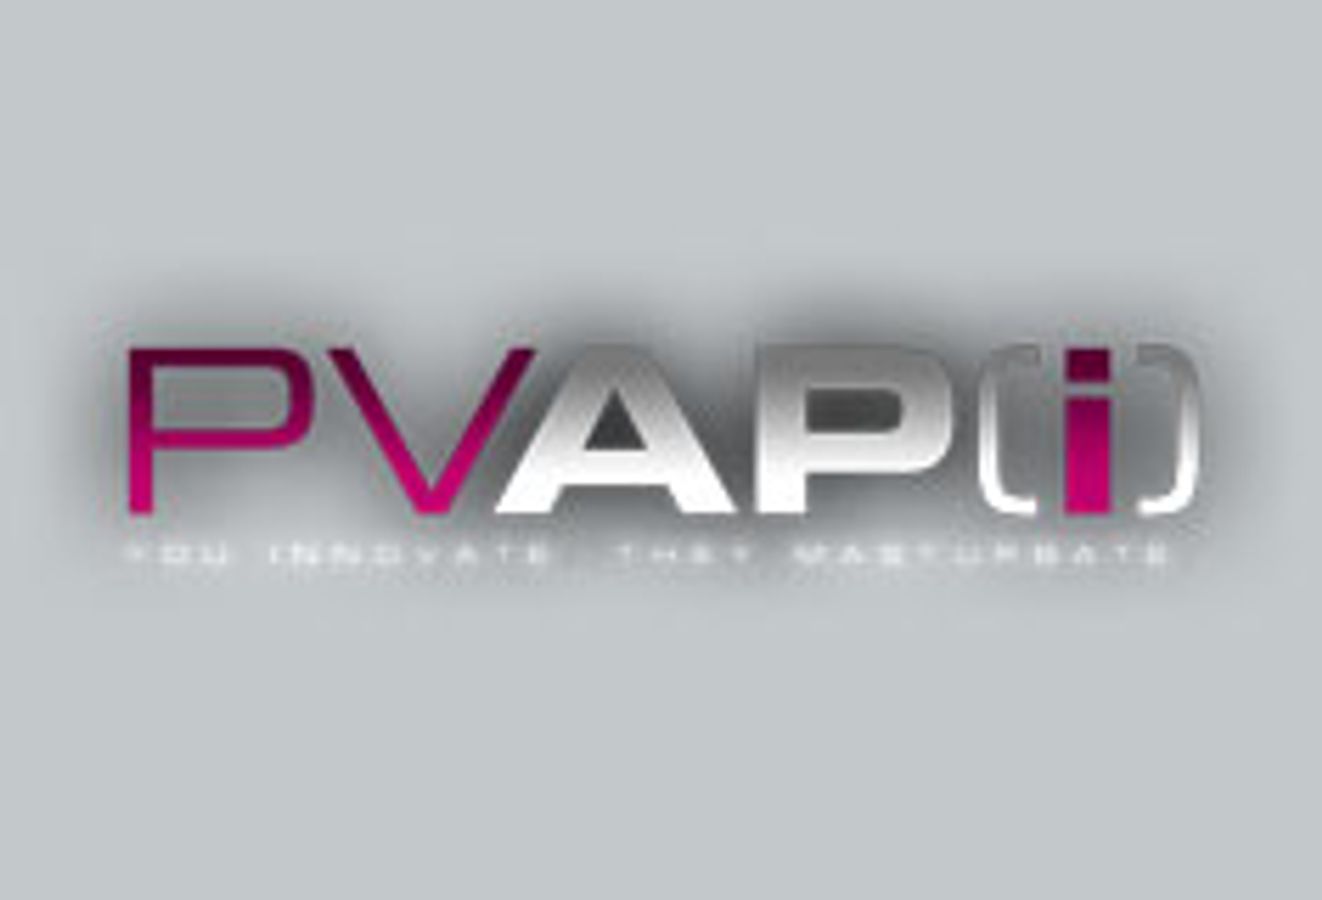 PV API